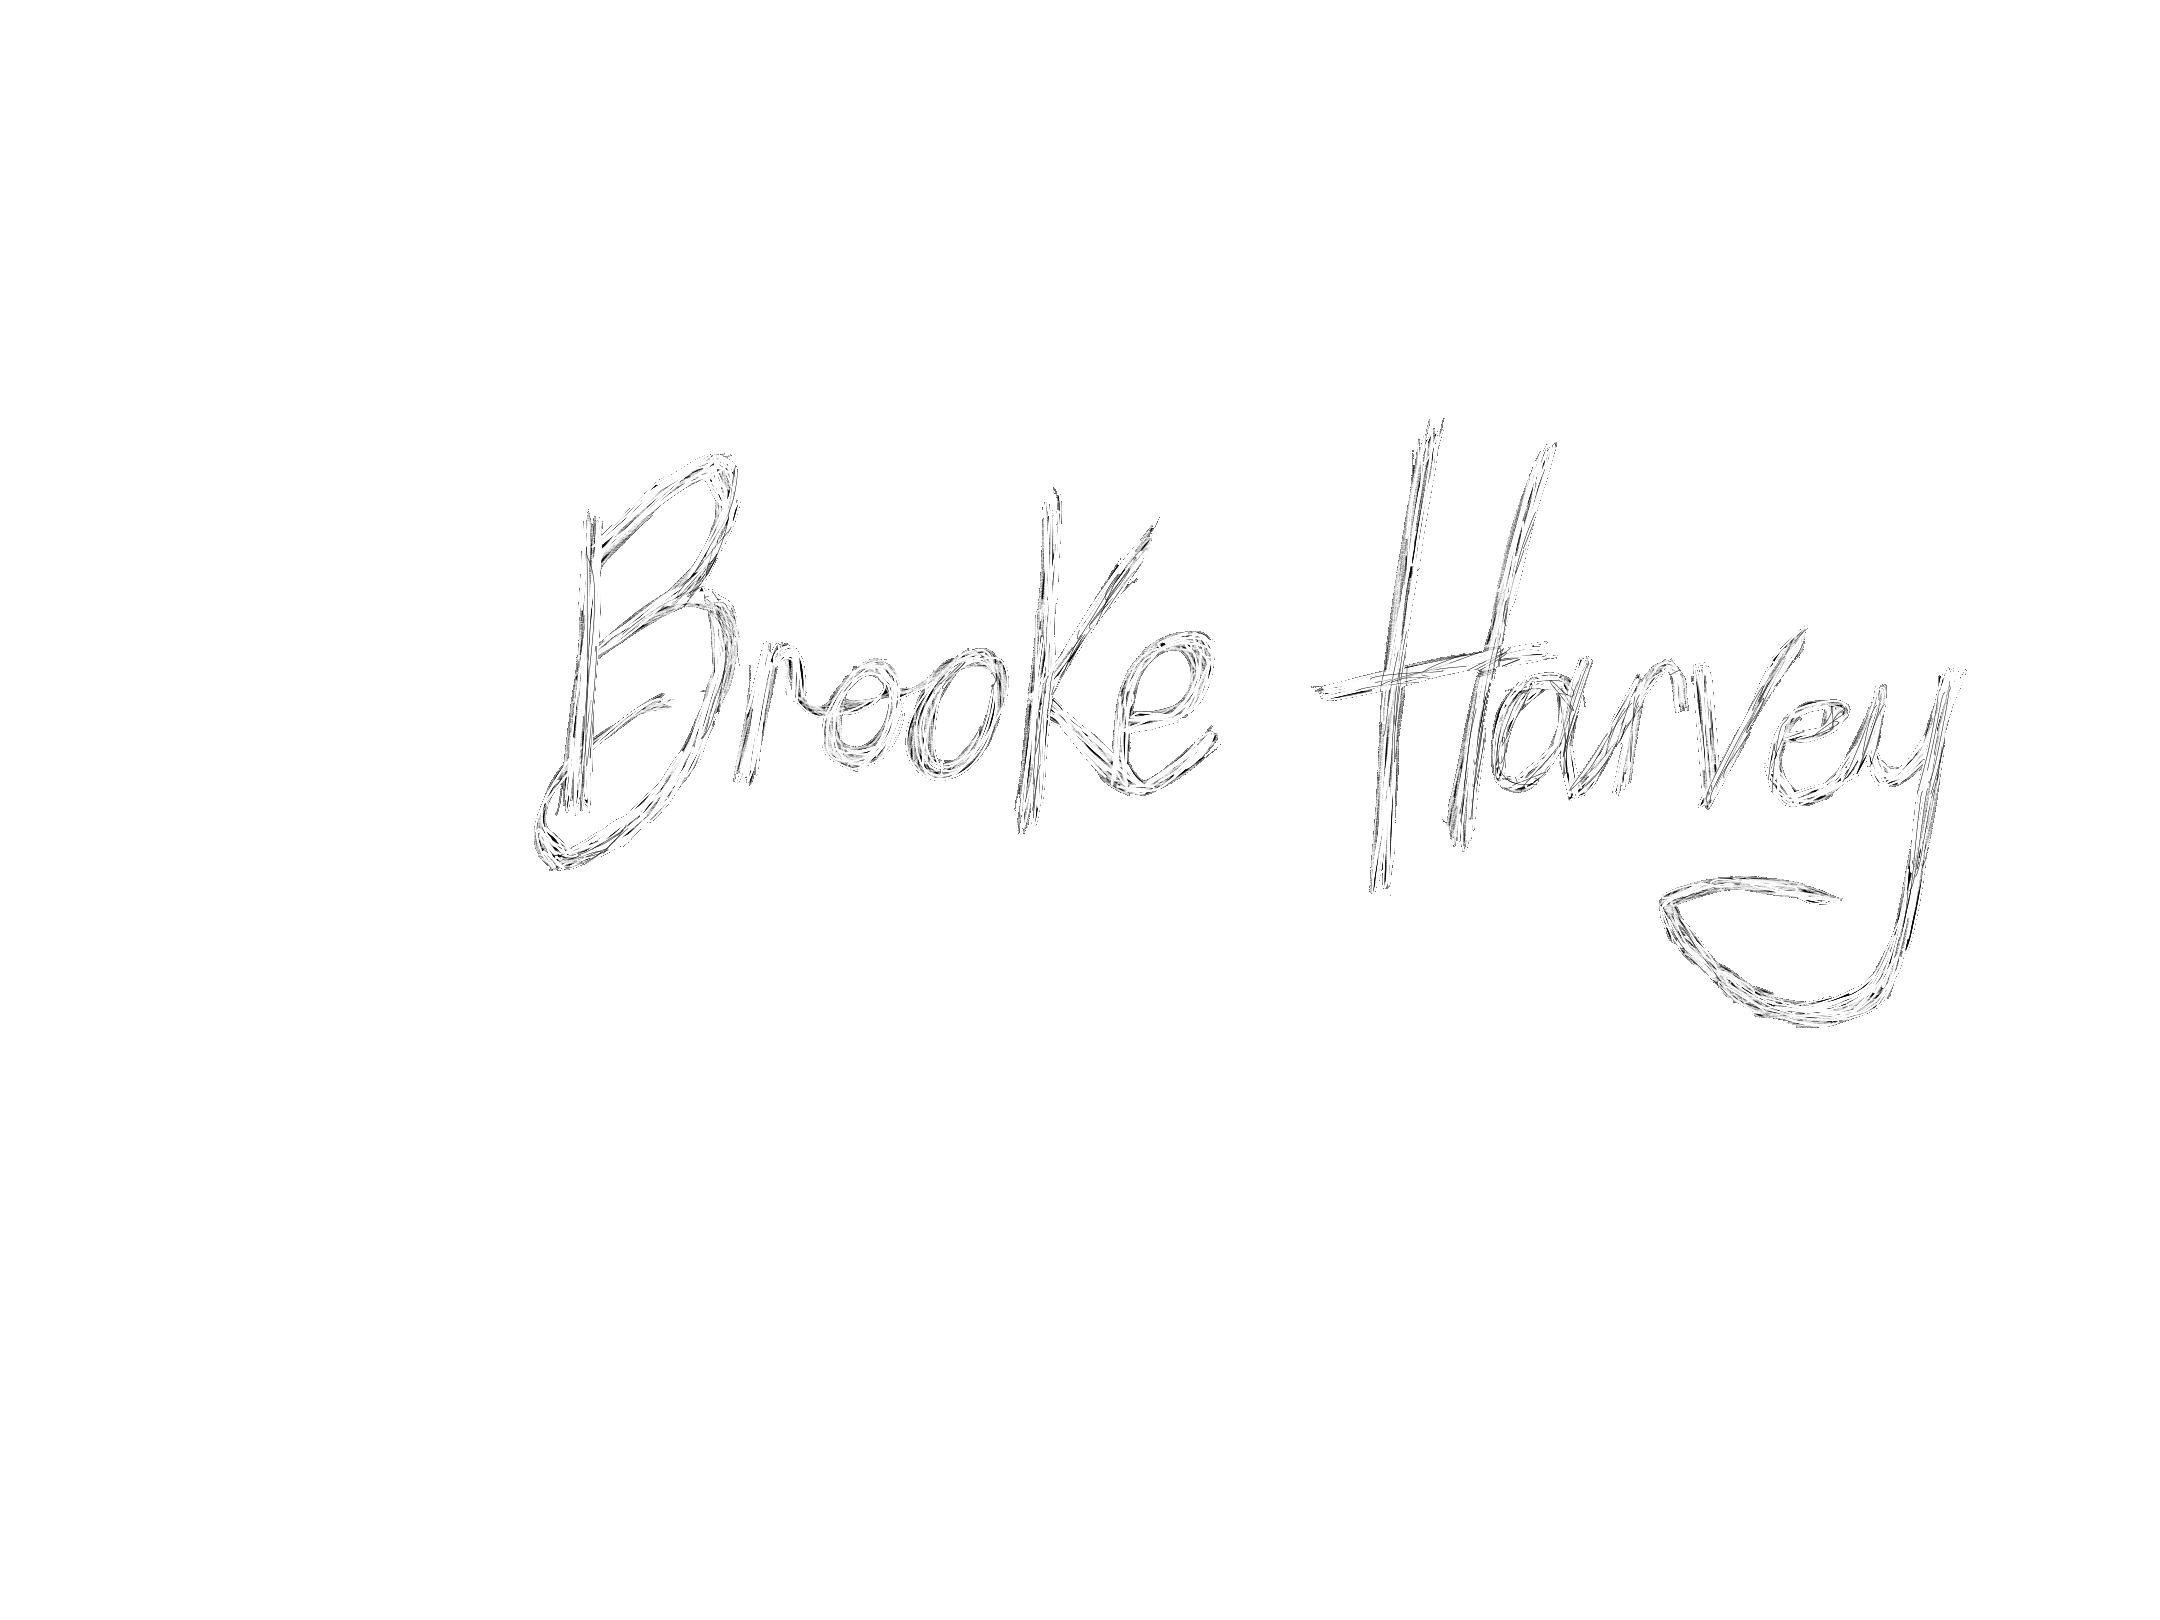 Brooke Harvey